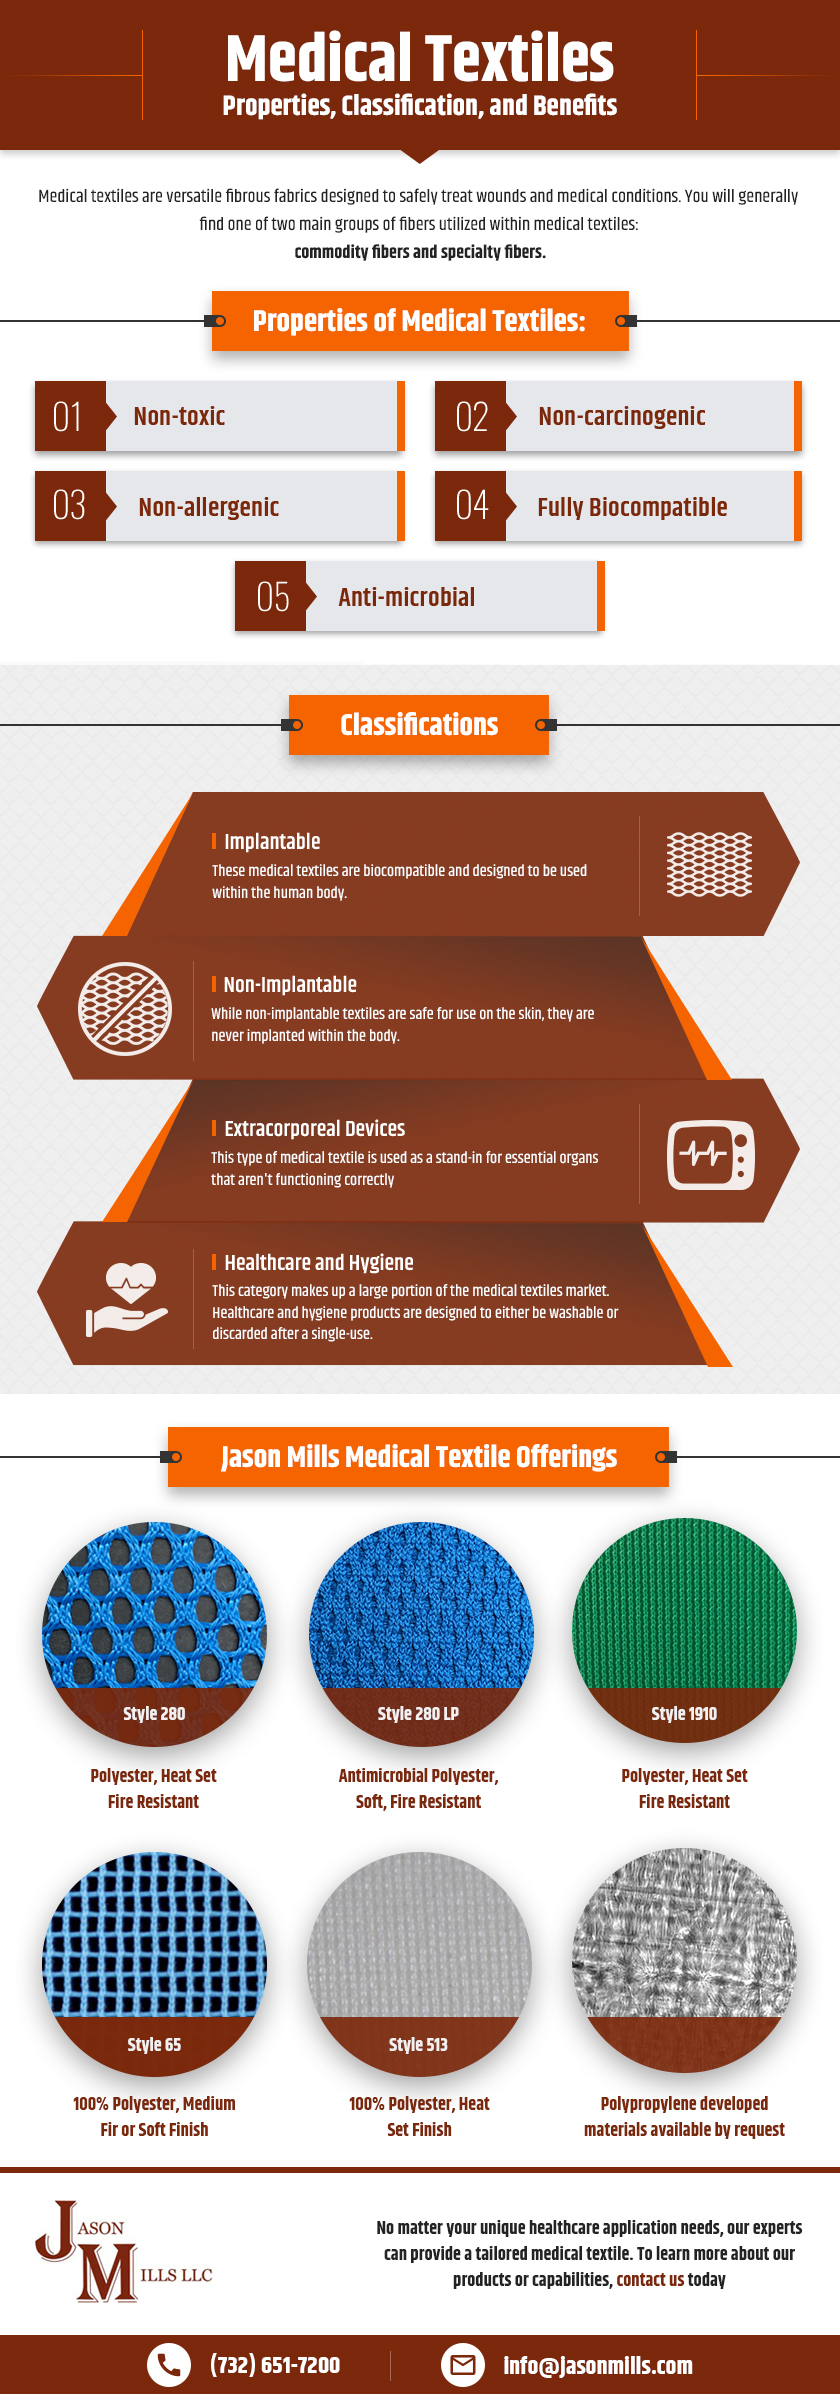 Medical textiles